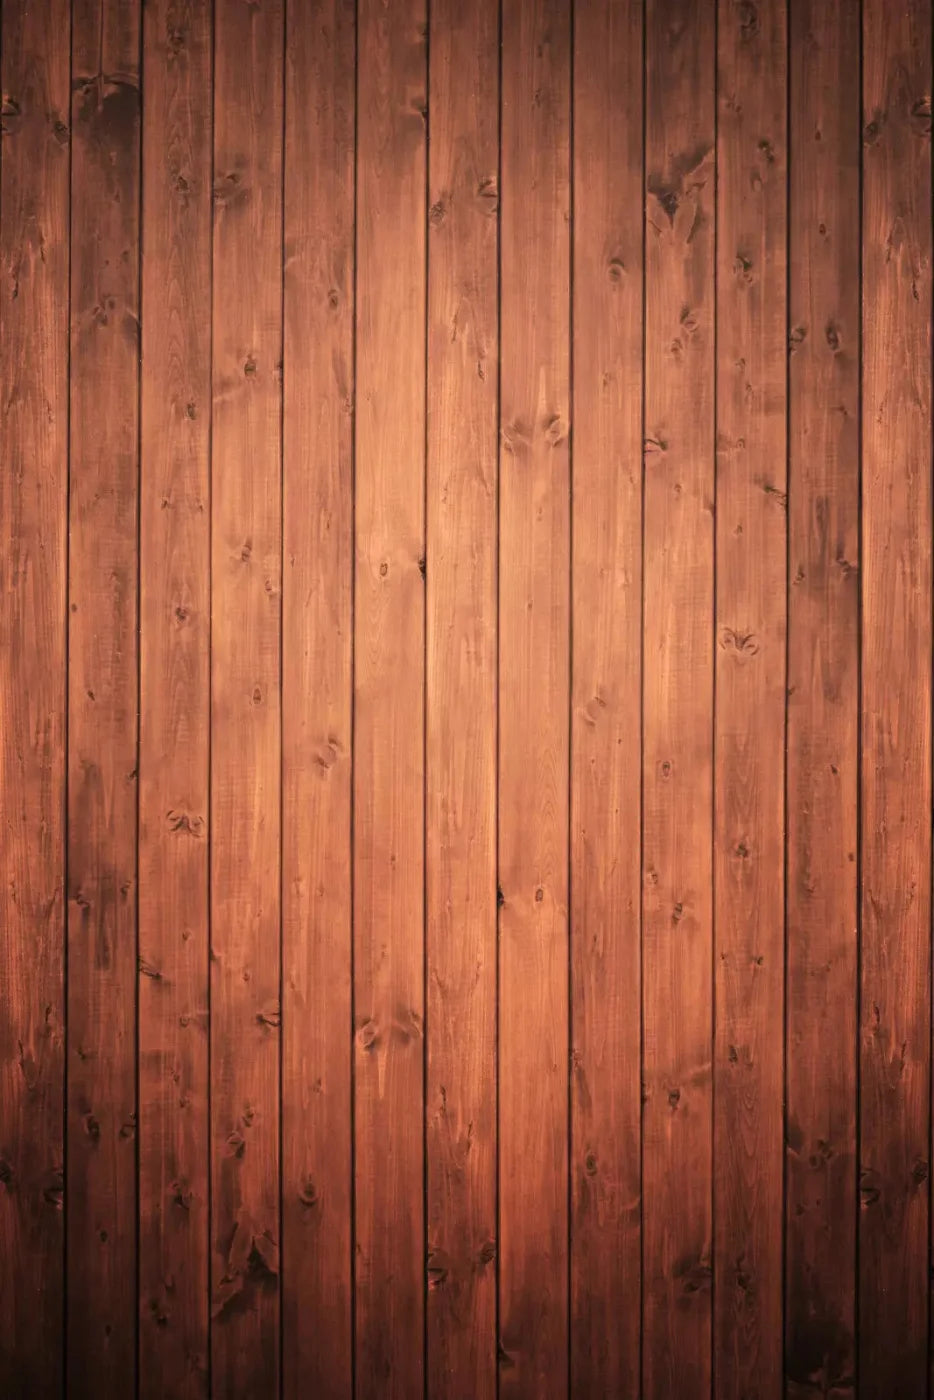 Warm Wooden Wall Backdrop